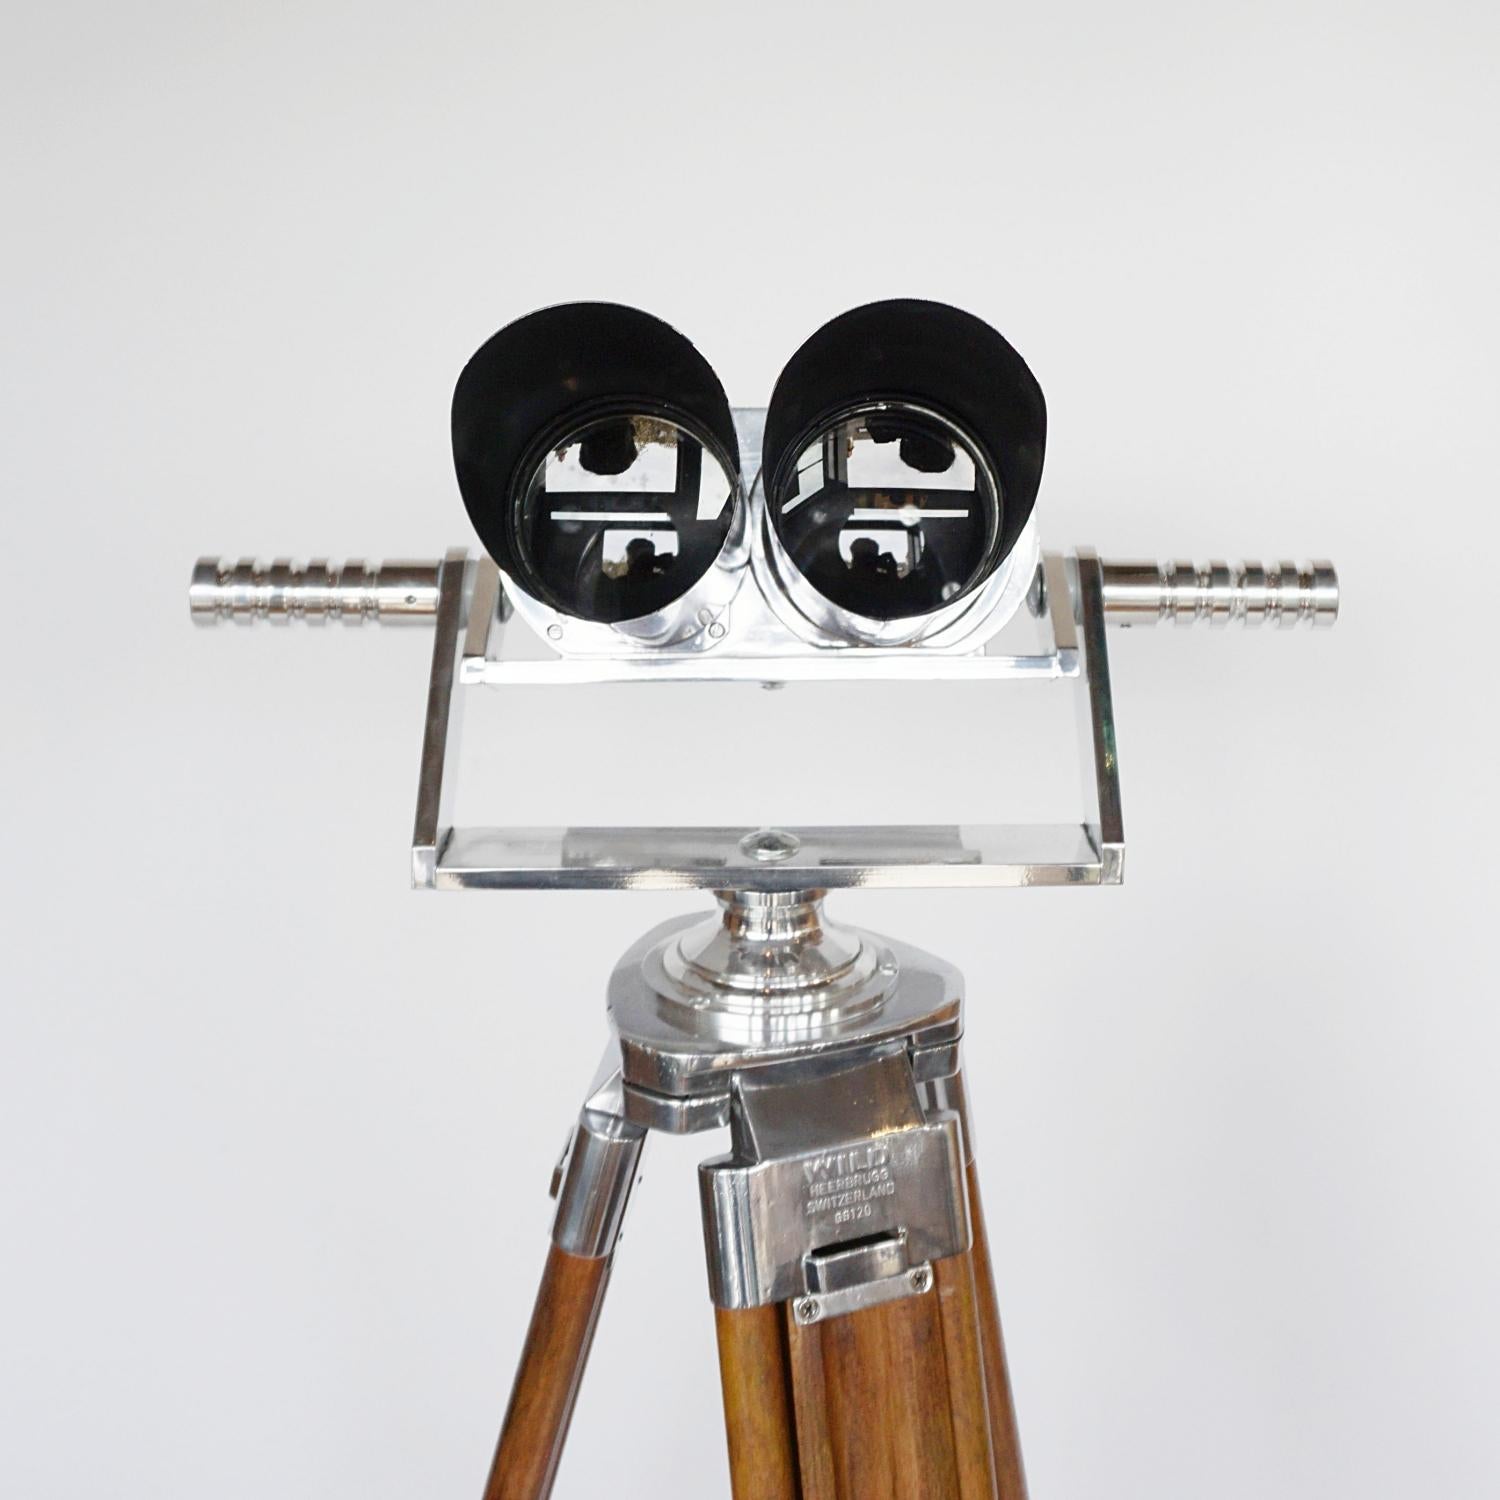 20th Century WW11 Obersvation Binoculars Designed by Emil Busch for Zeiss